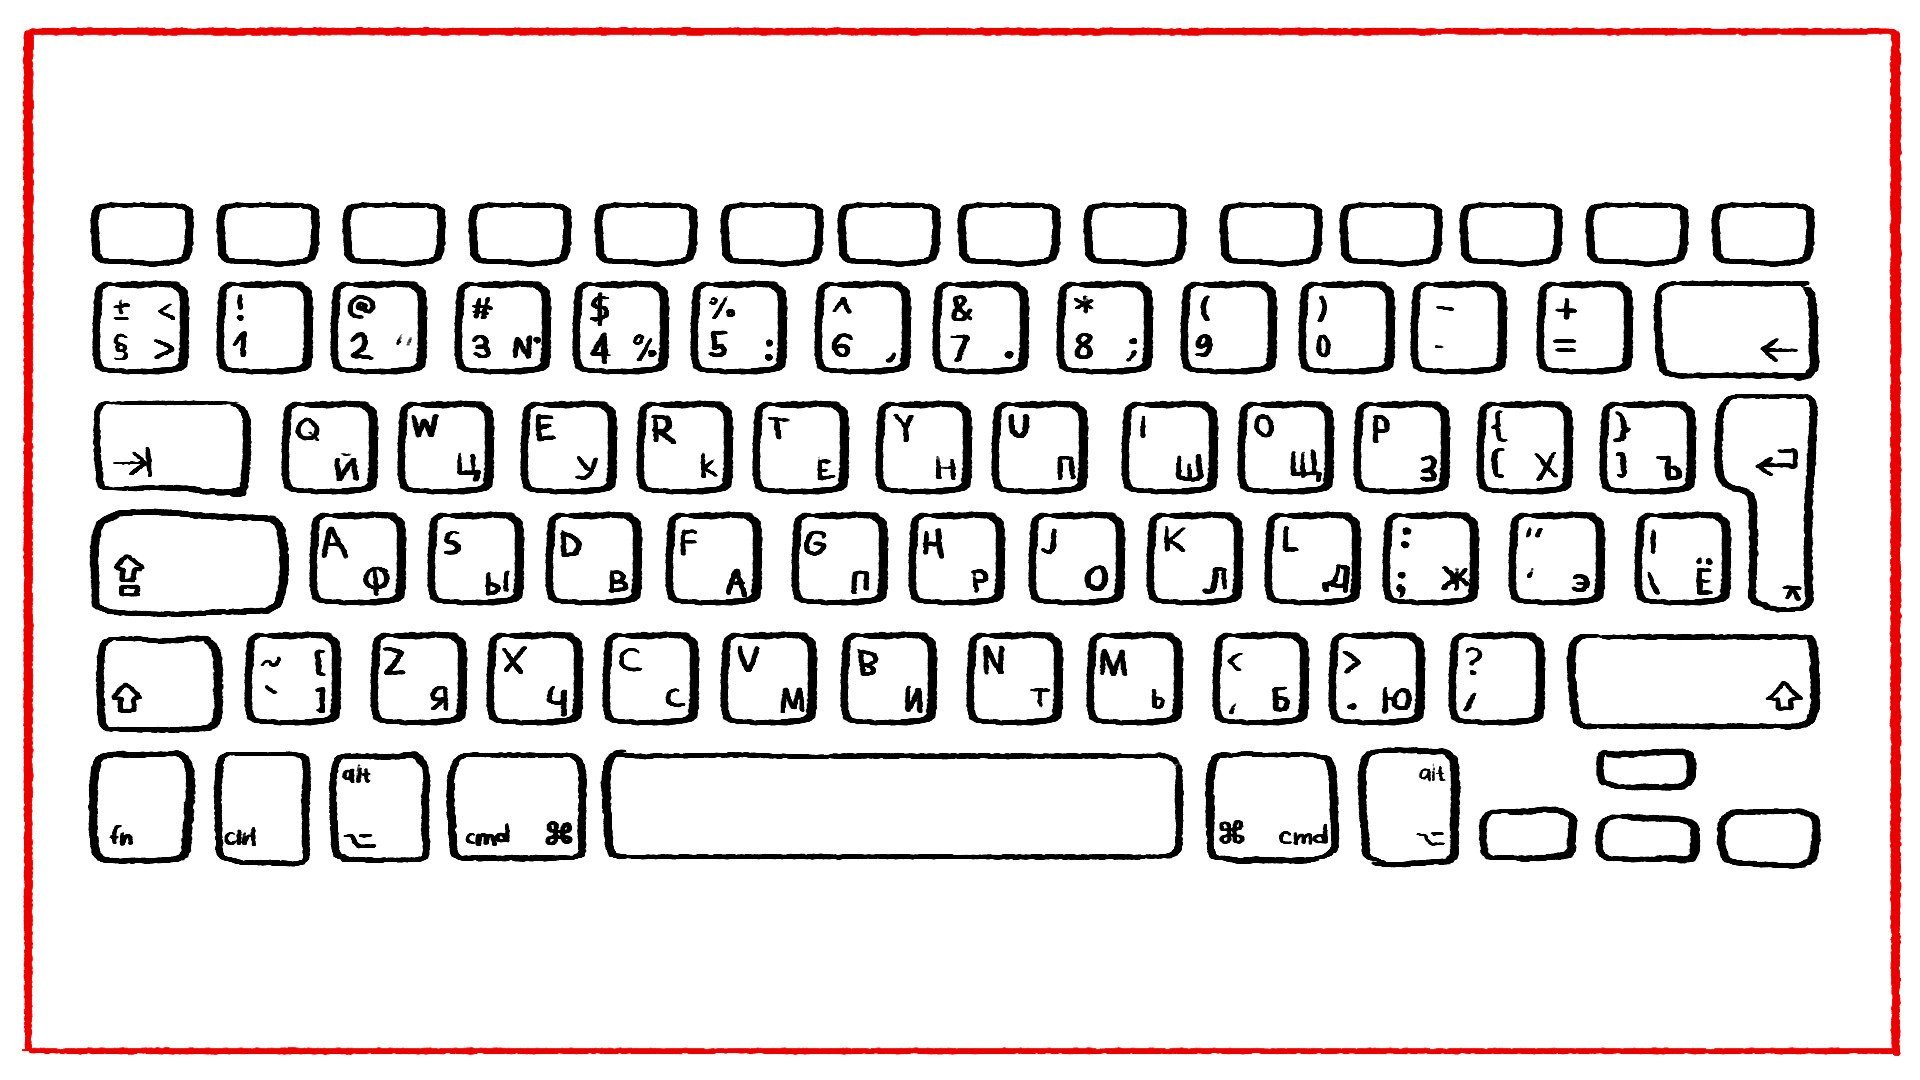 Распечатка клавиатуры компьютера